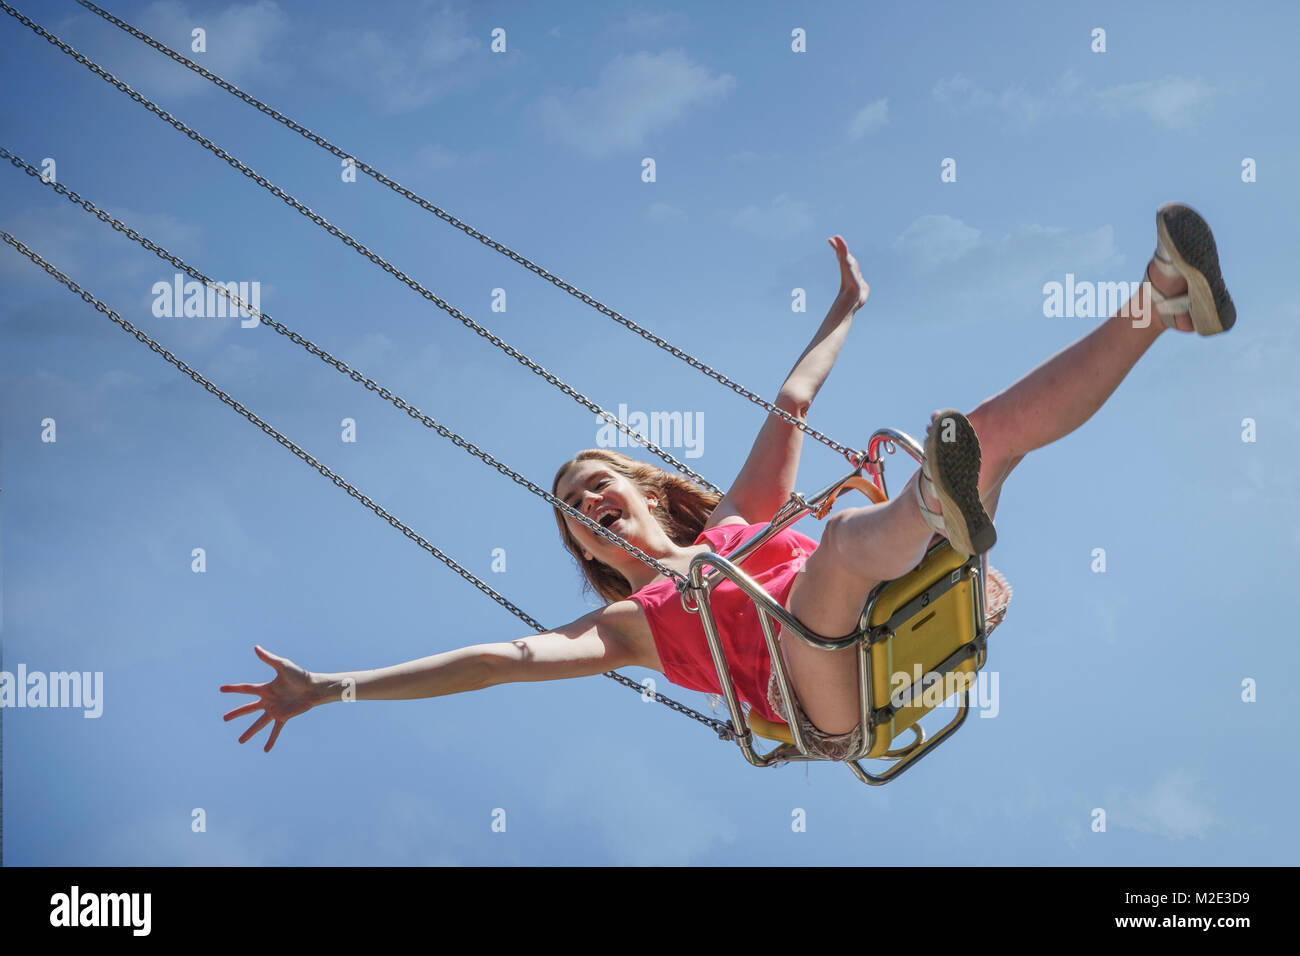 Smiling Caucasian woman riding swing on amusement park ride Stock Photo